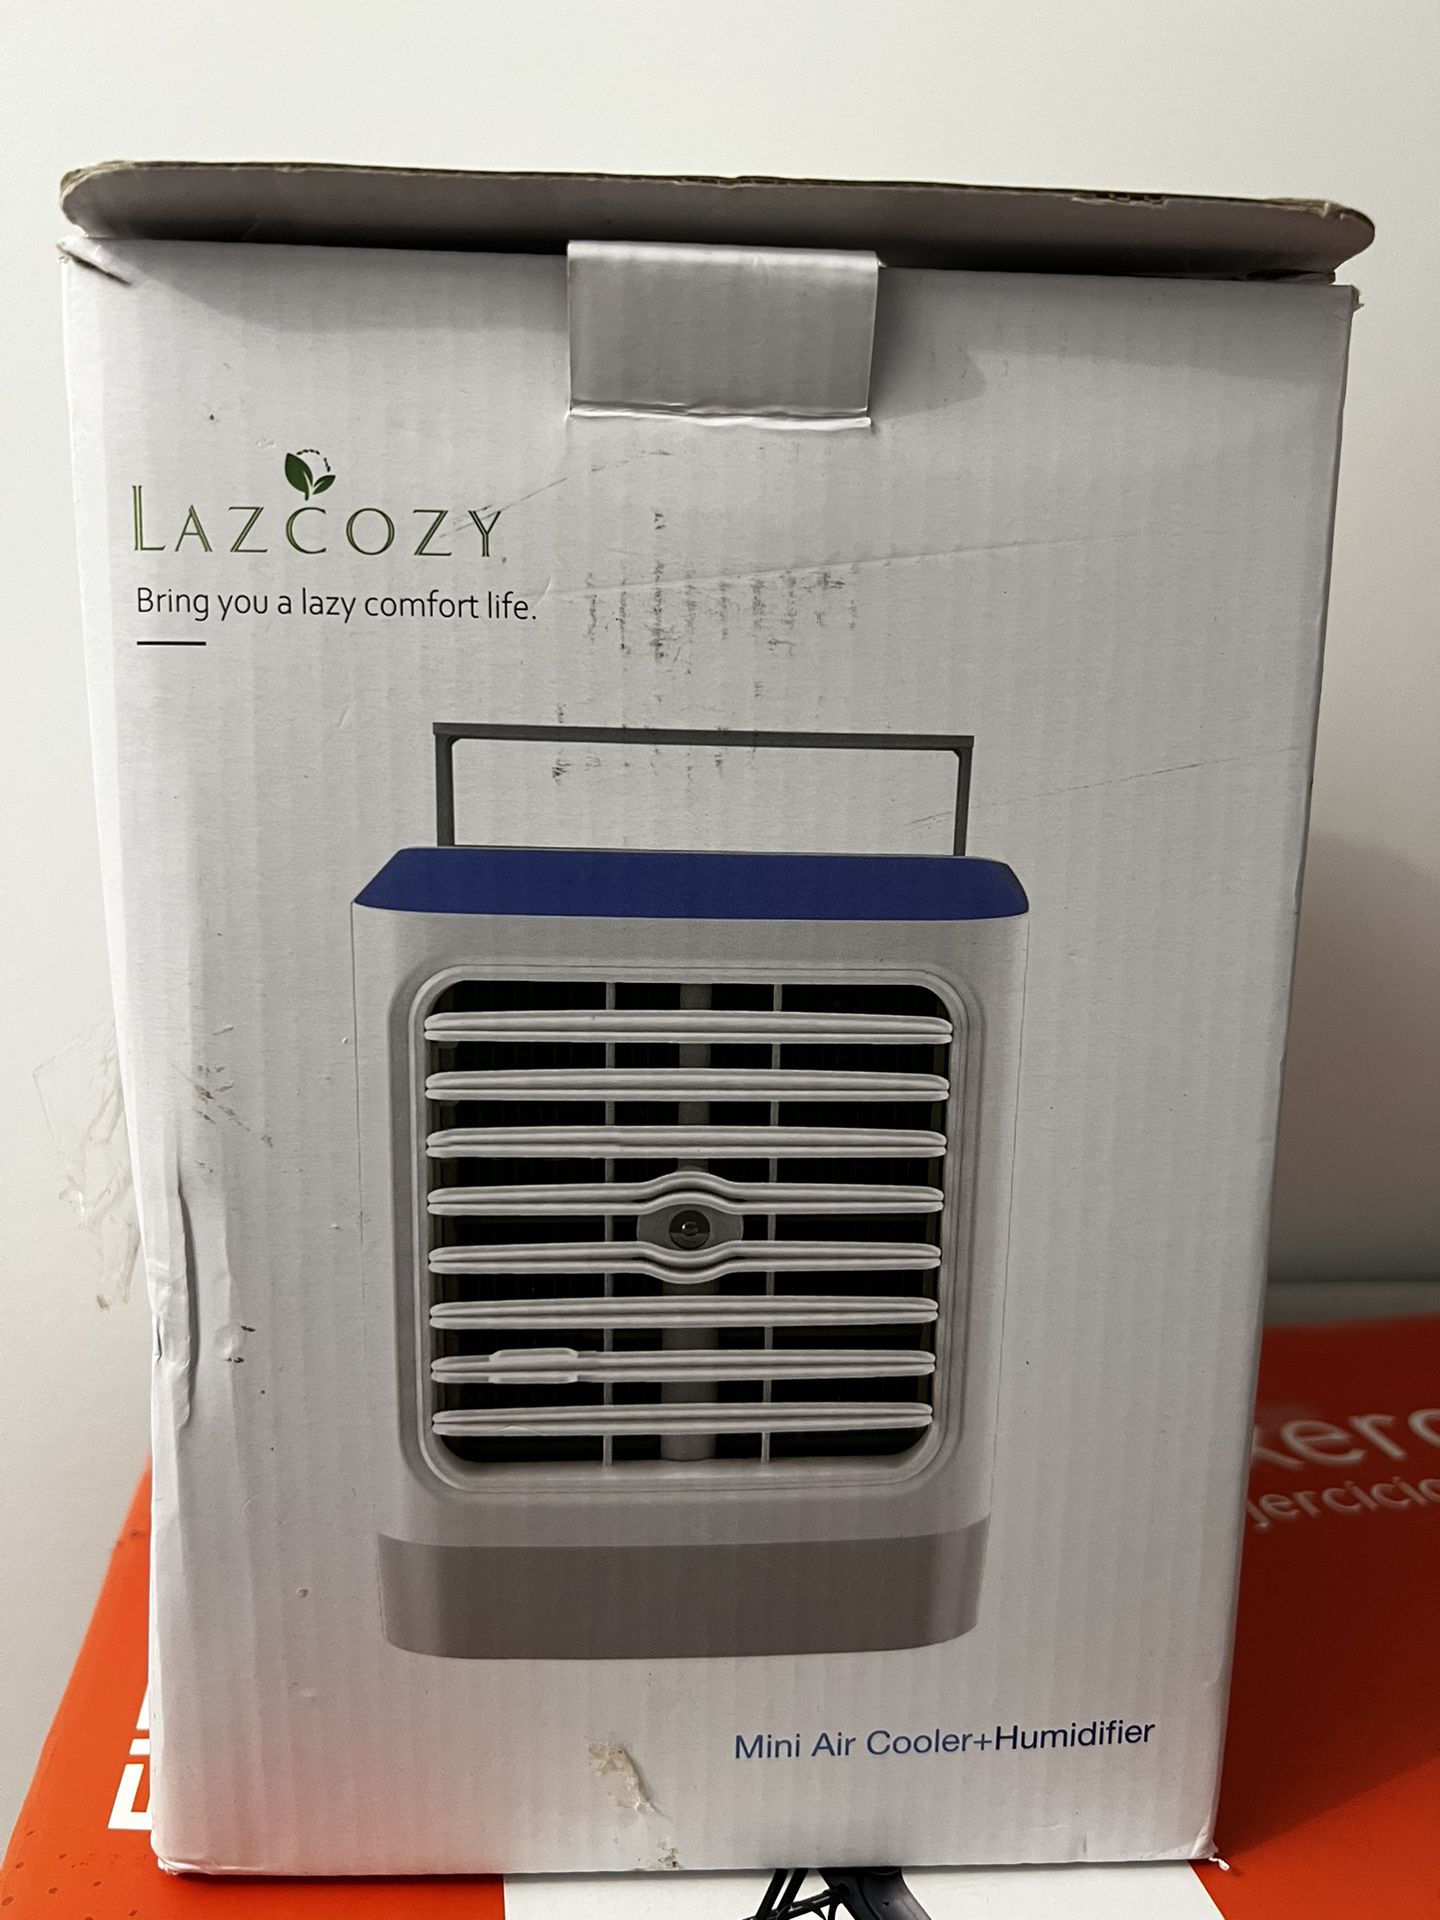 Lqzycozy Mini Air cooler + Humidifier 